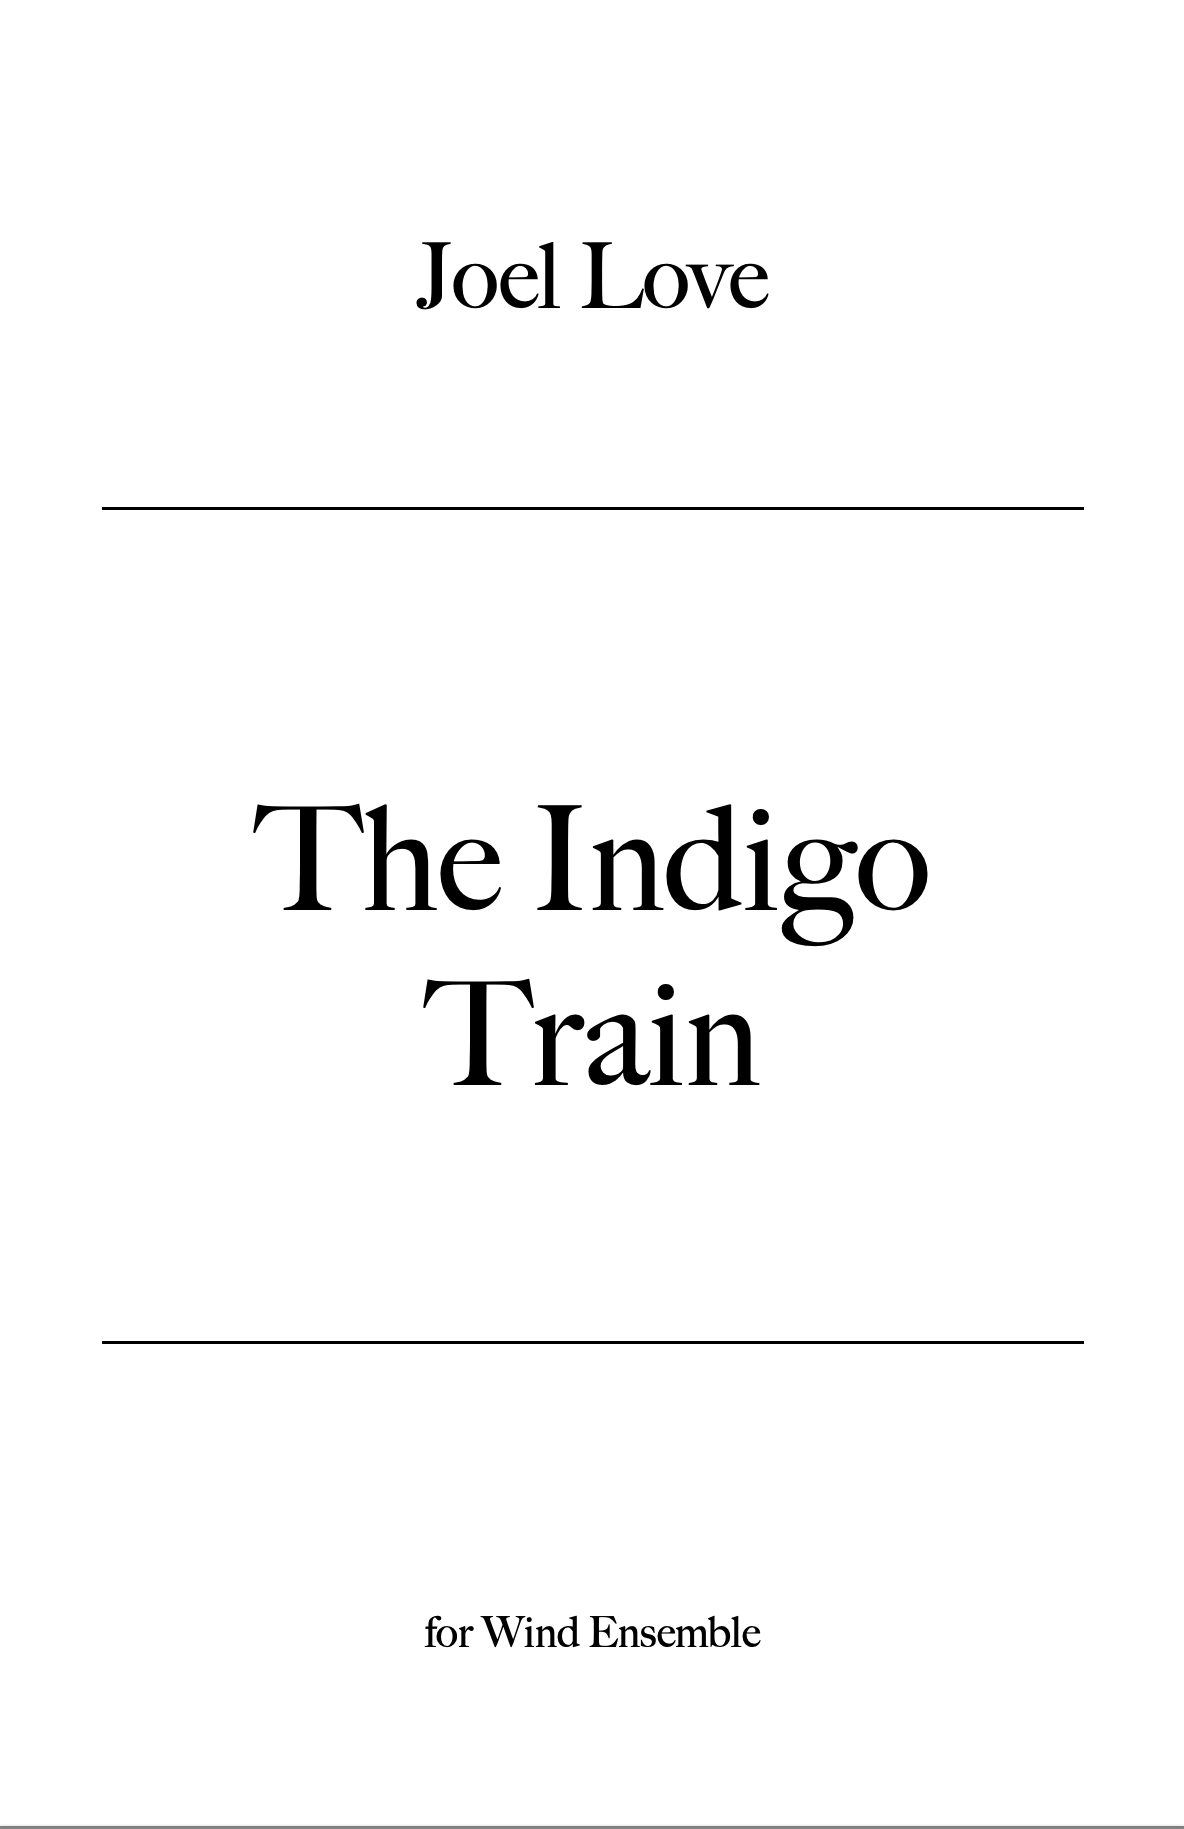 The Indigo Train by Joel Love